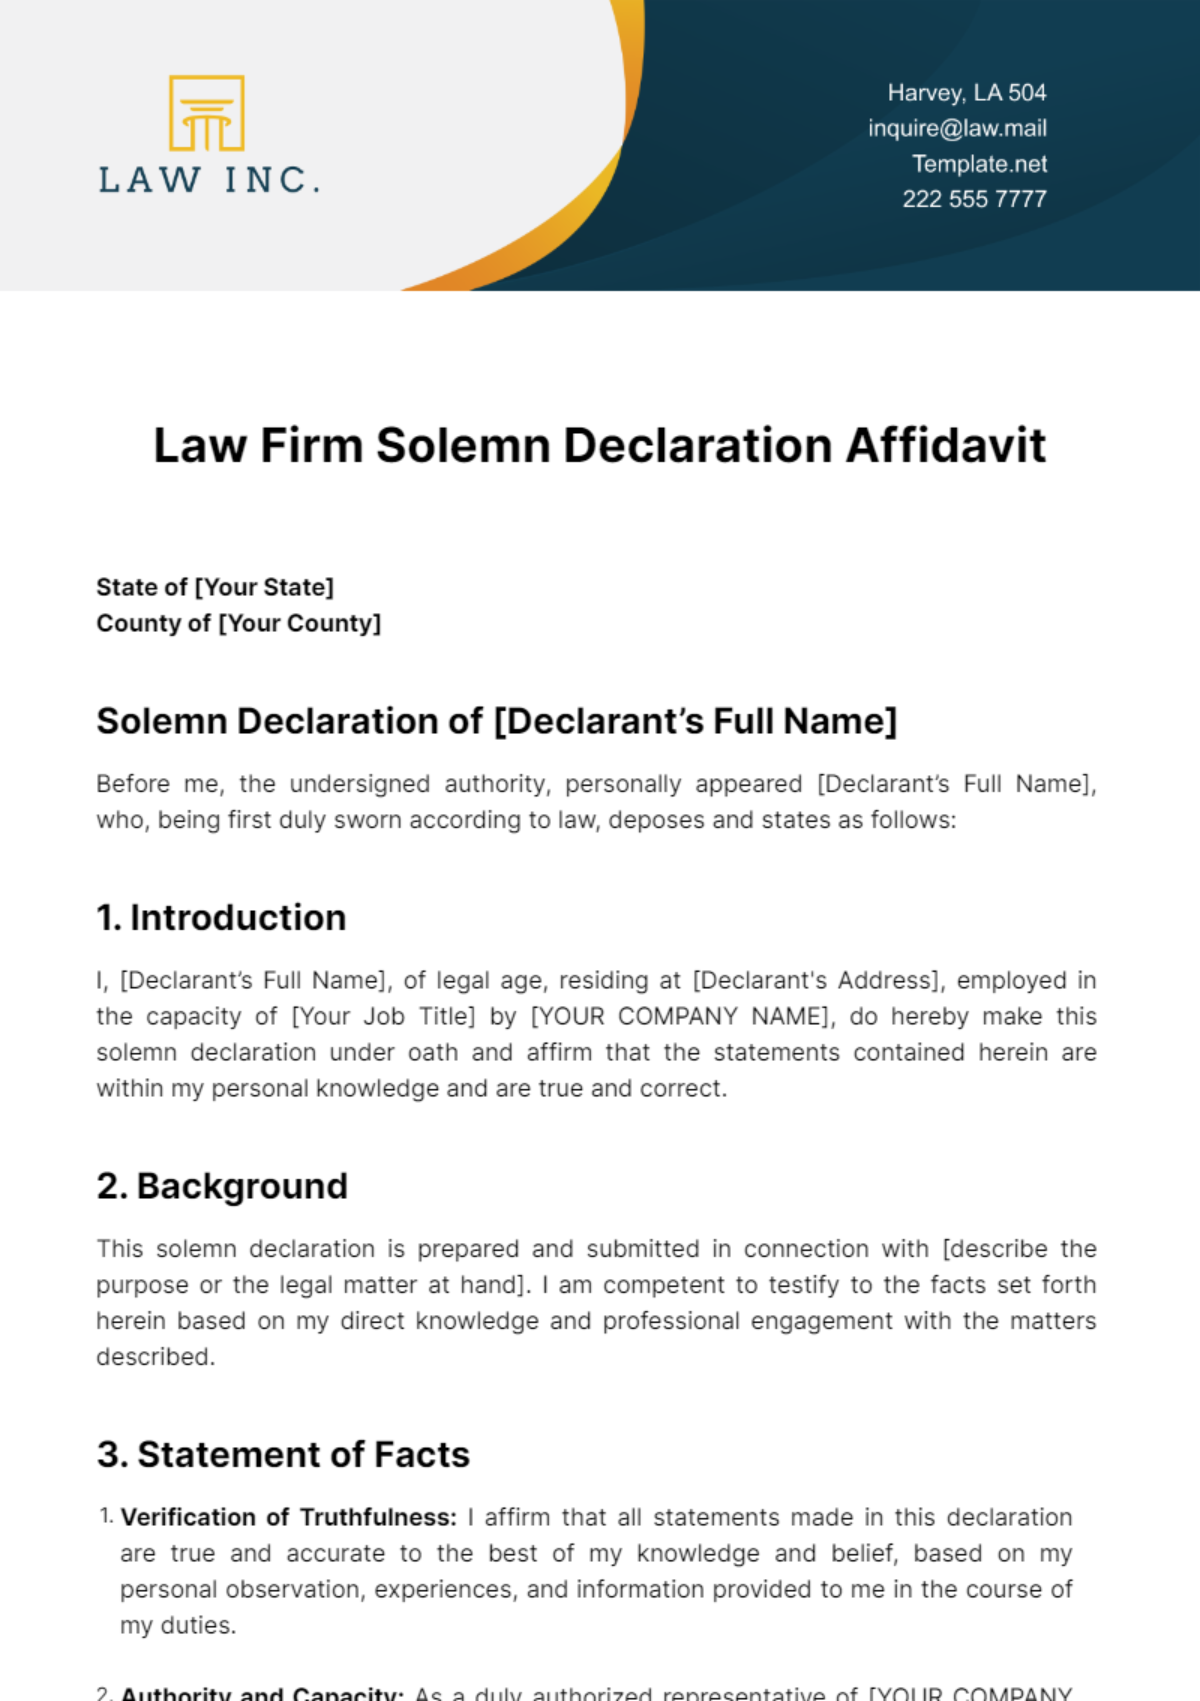 Law Firm Solemn Declaration Affidavit Template